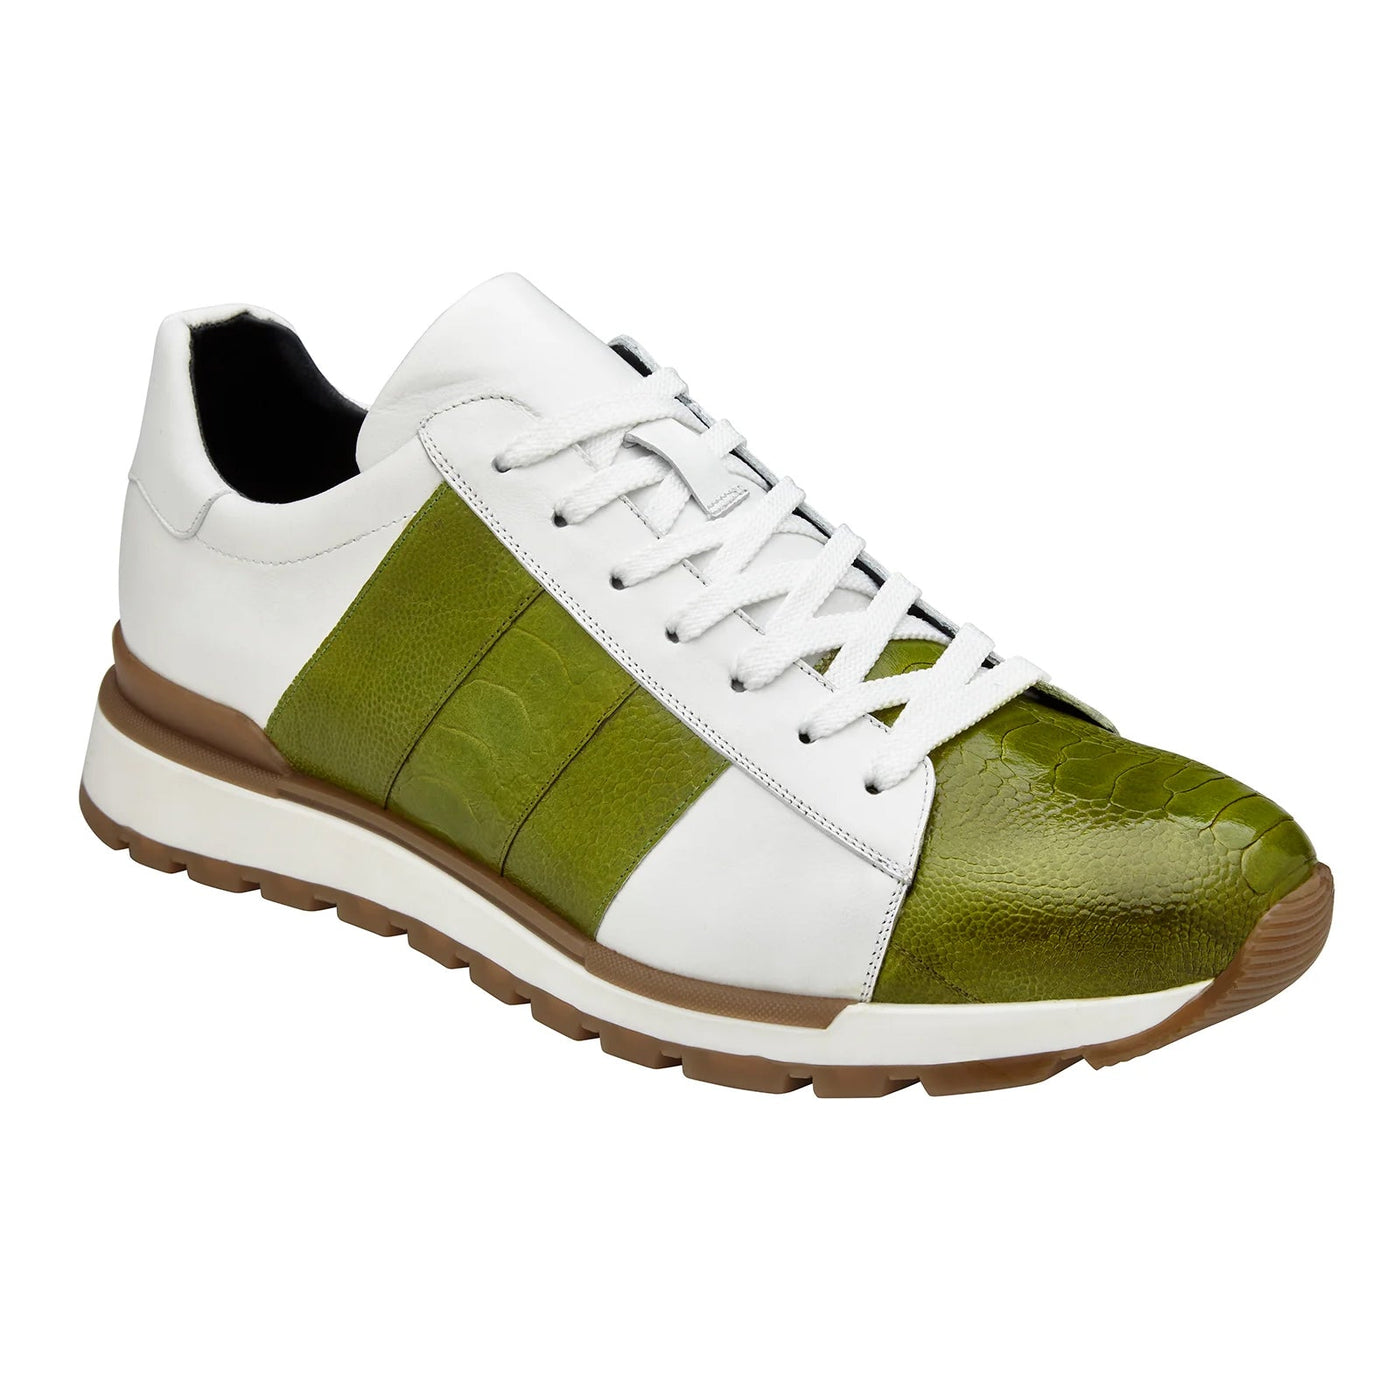 Men's Belvedere Blake Calf & Ostrich Leg Dress Sneaker in Lime Green & White